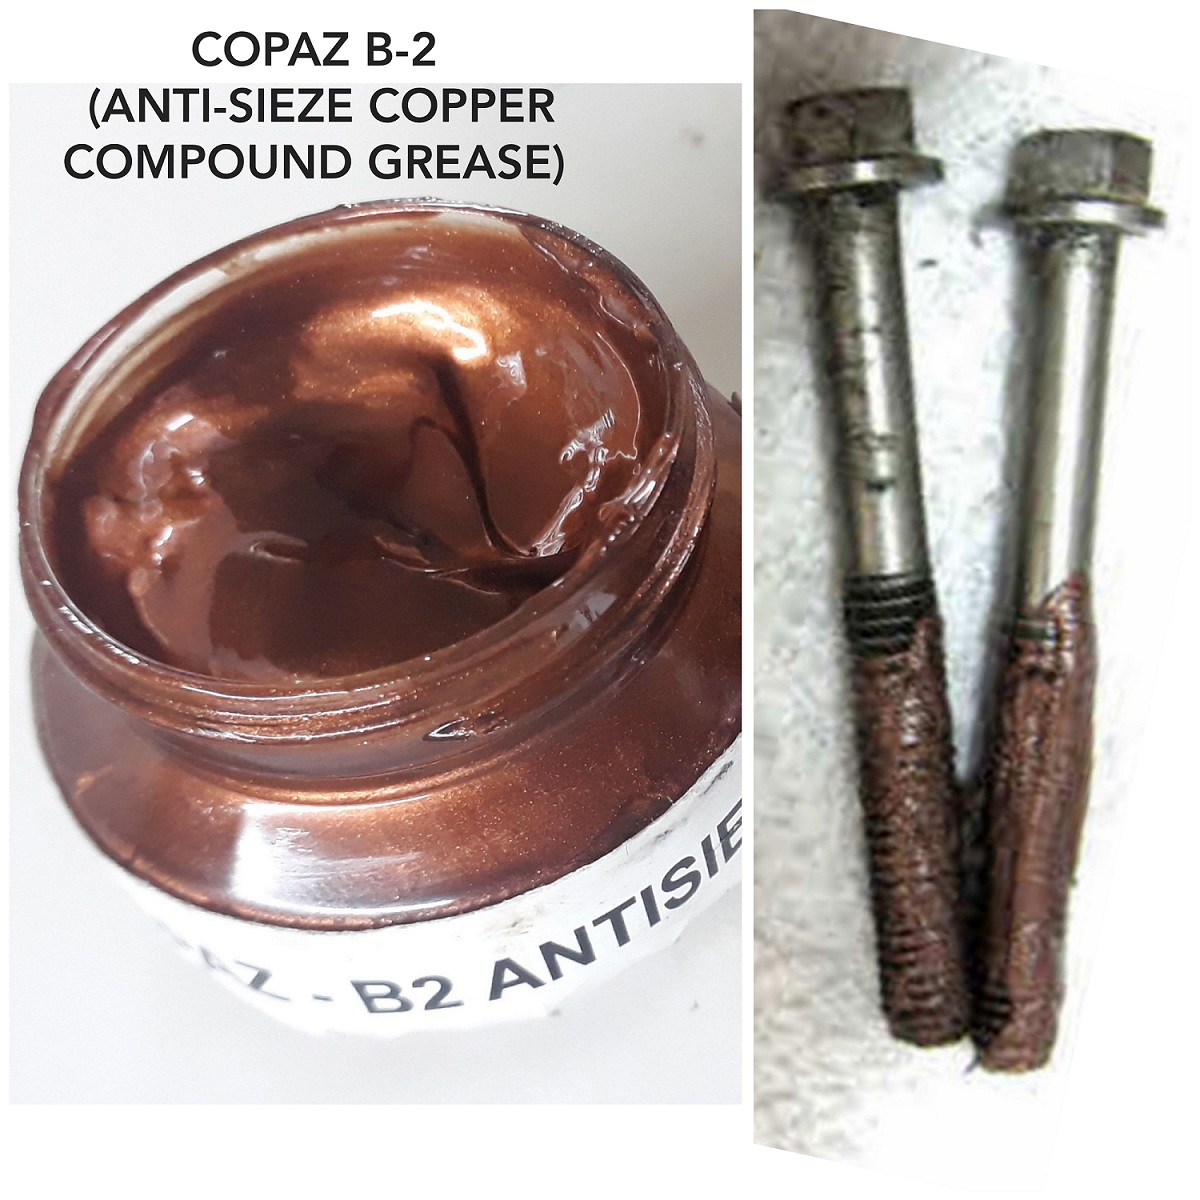 Copaz-B2 (Copper Anti-seize Grease)